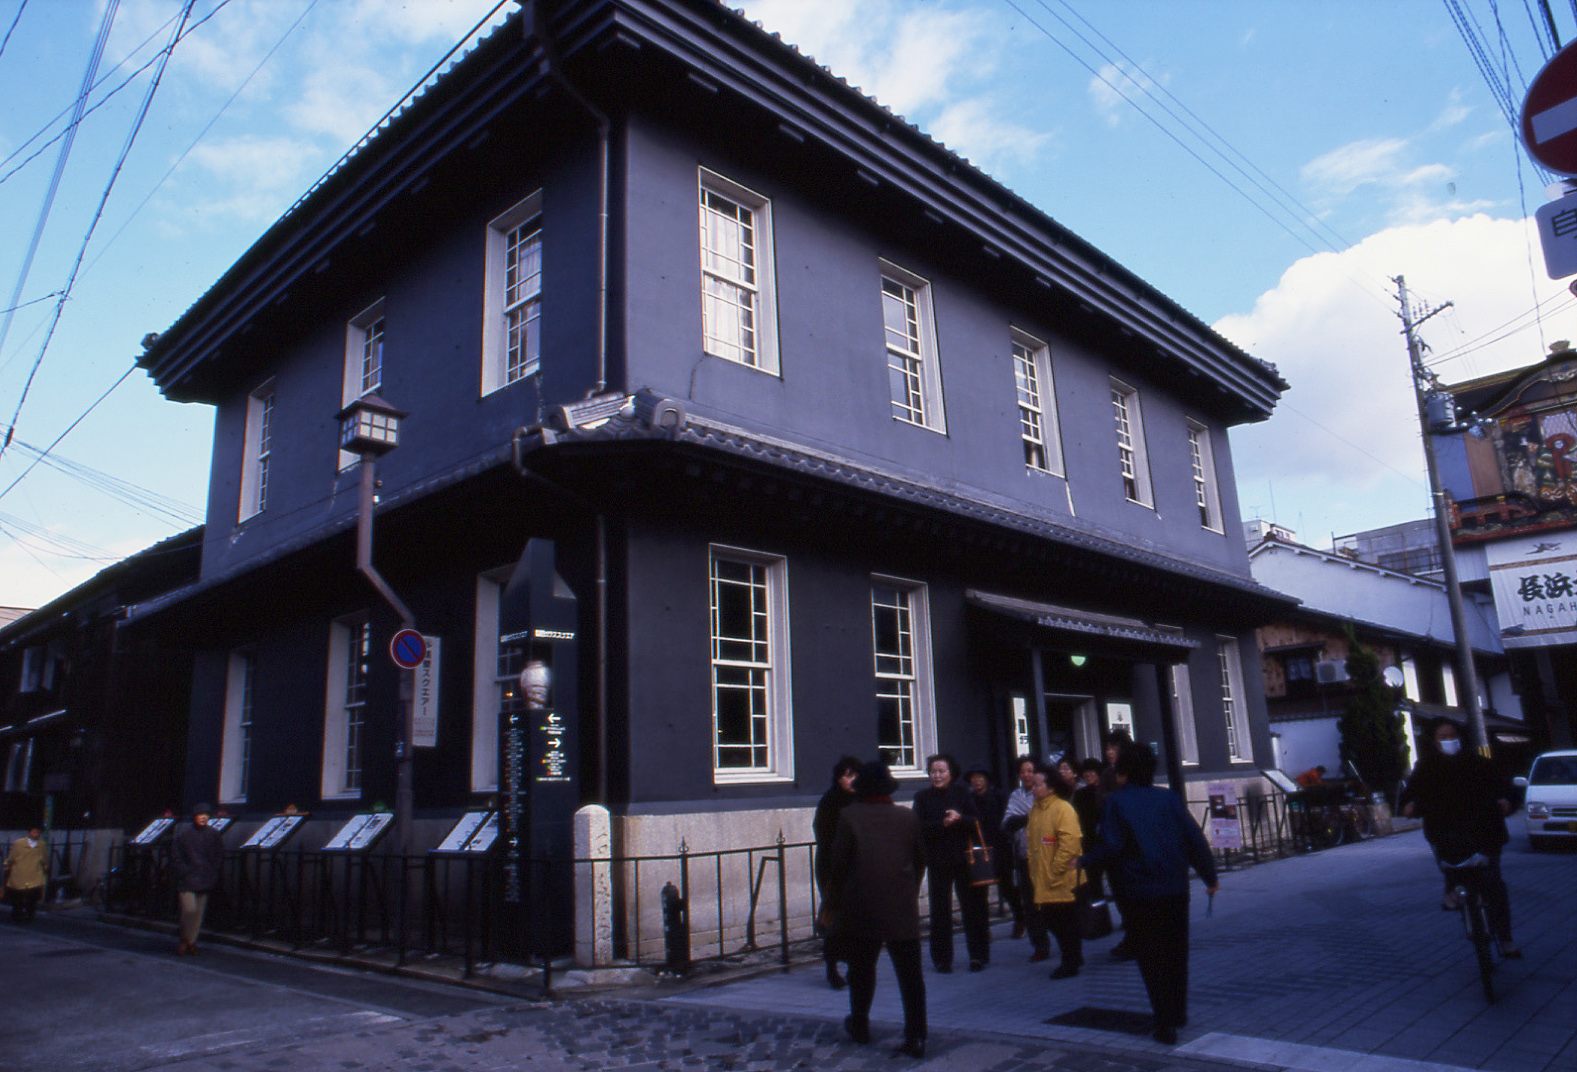 The Kurokabe Ichigokan is located in a repurposed bank built in 1900.